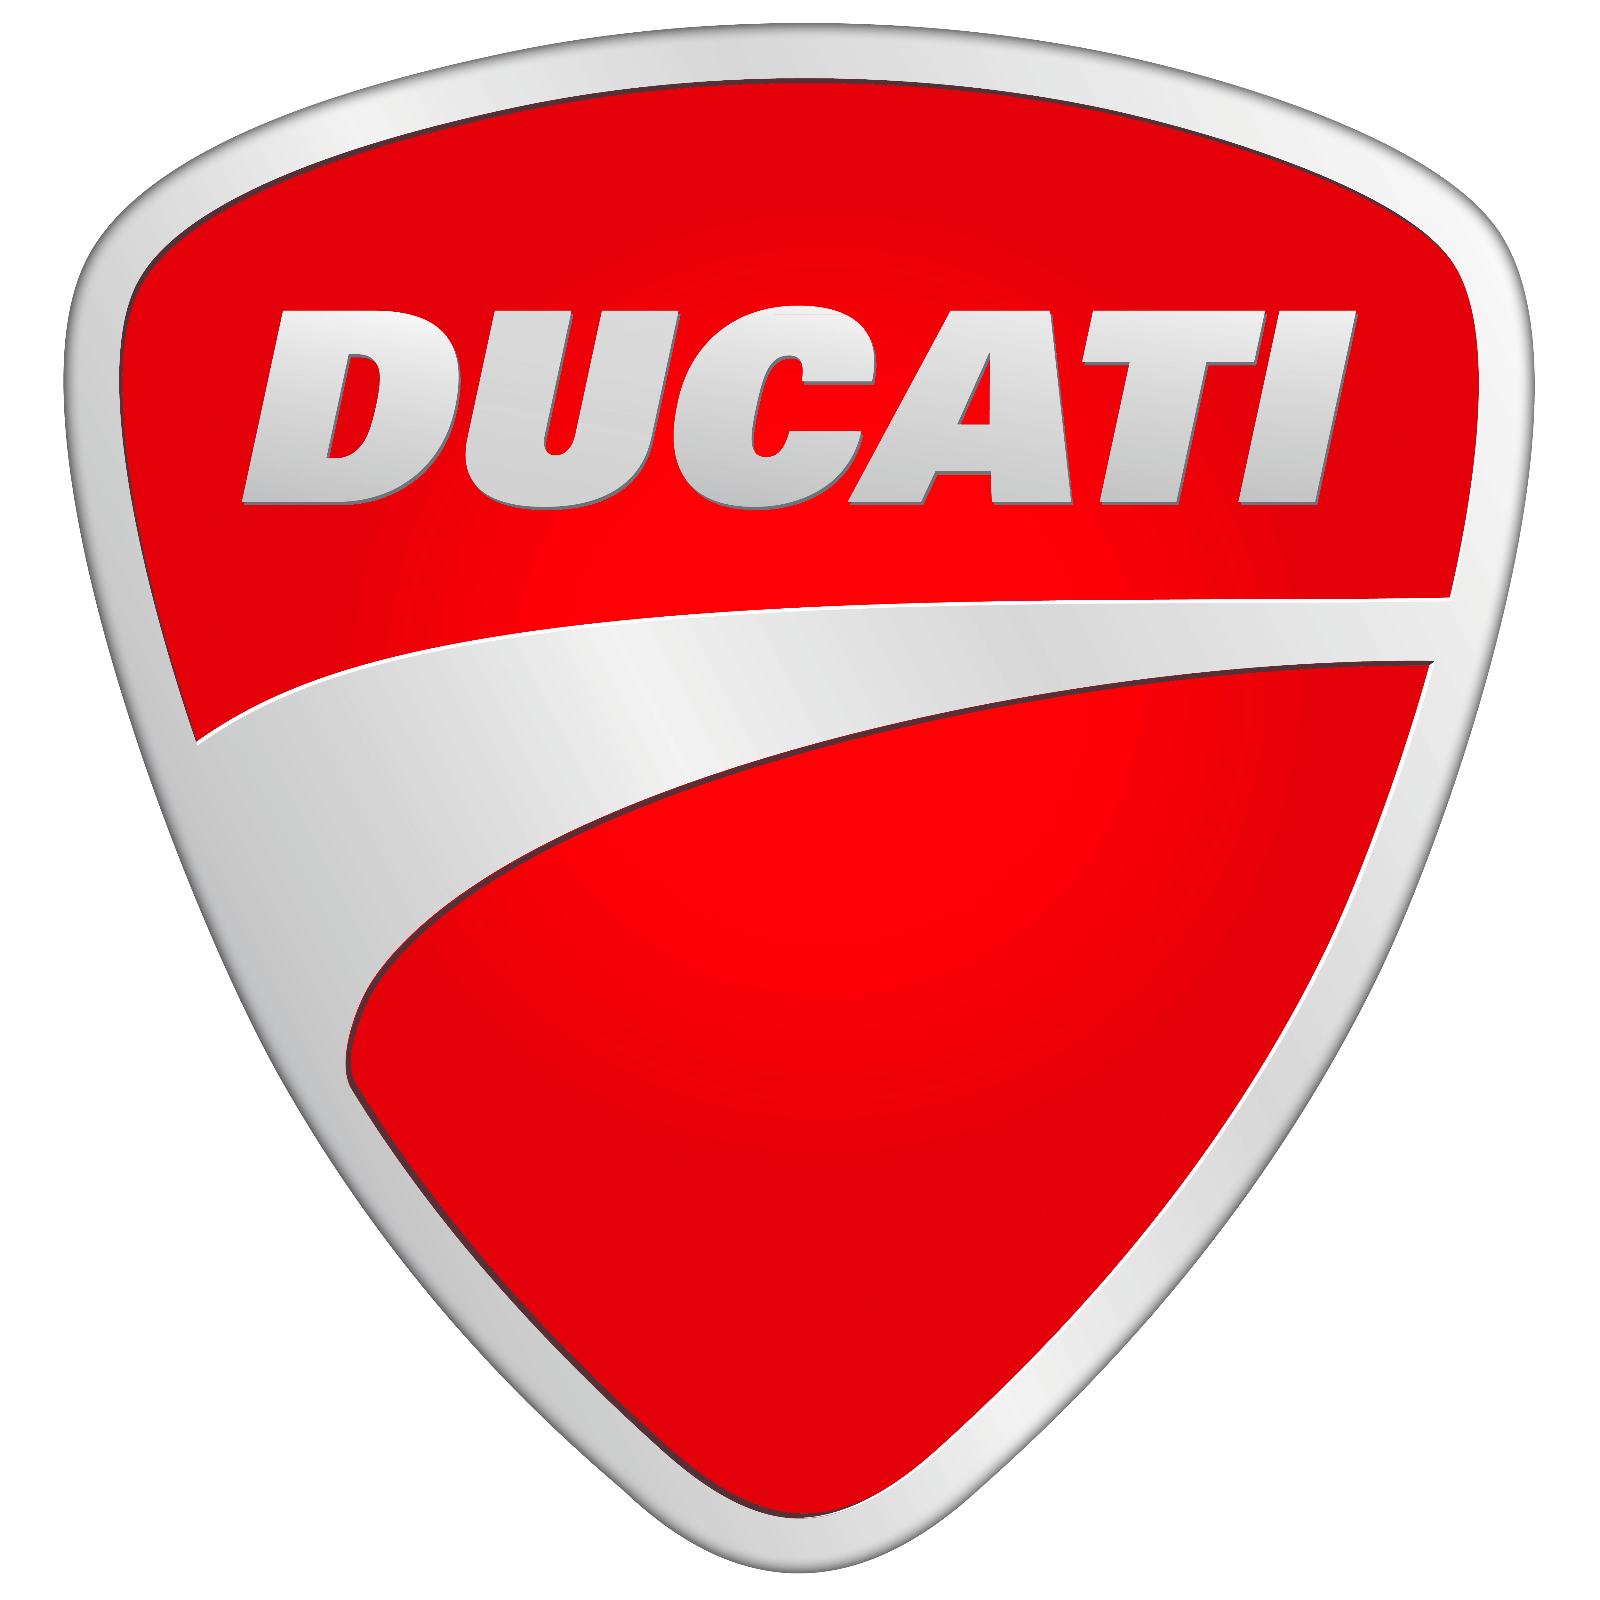 Ducati Boots Speed Evo C1 WP 98104444 by Alpinestars NEW FROM DUCATI